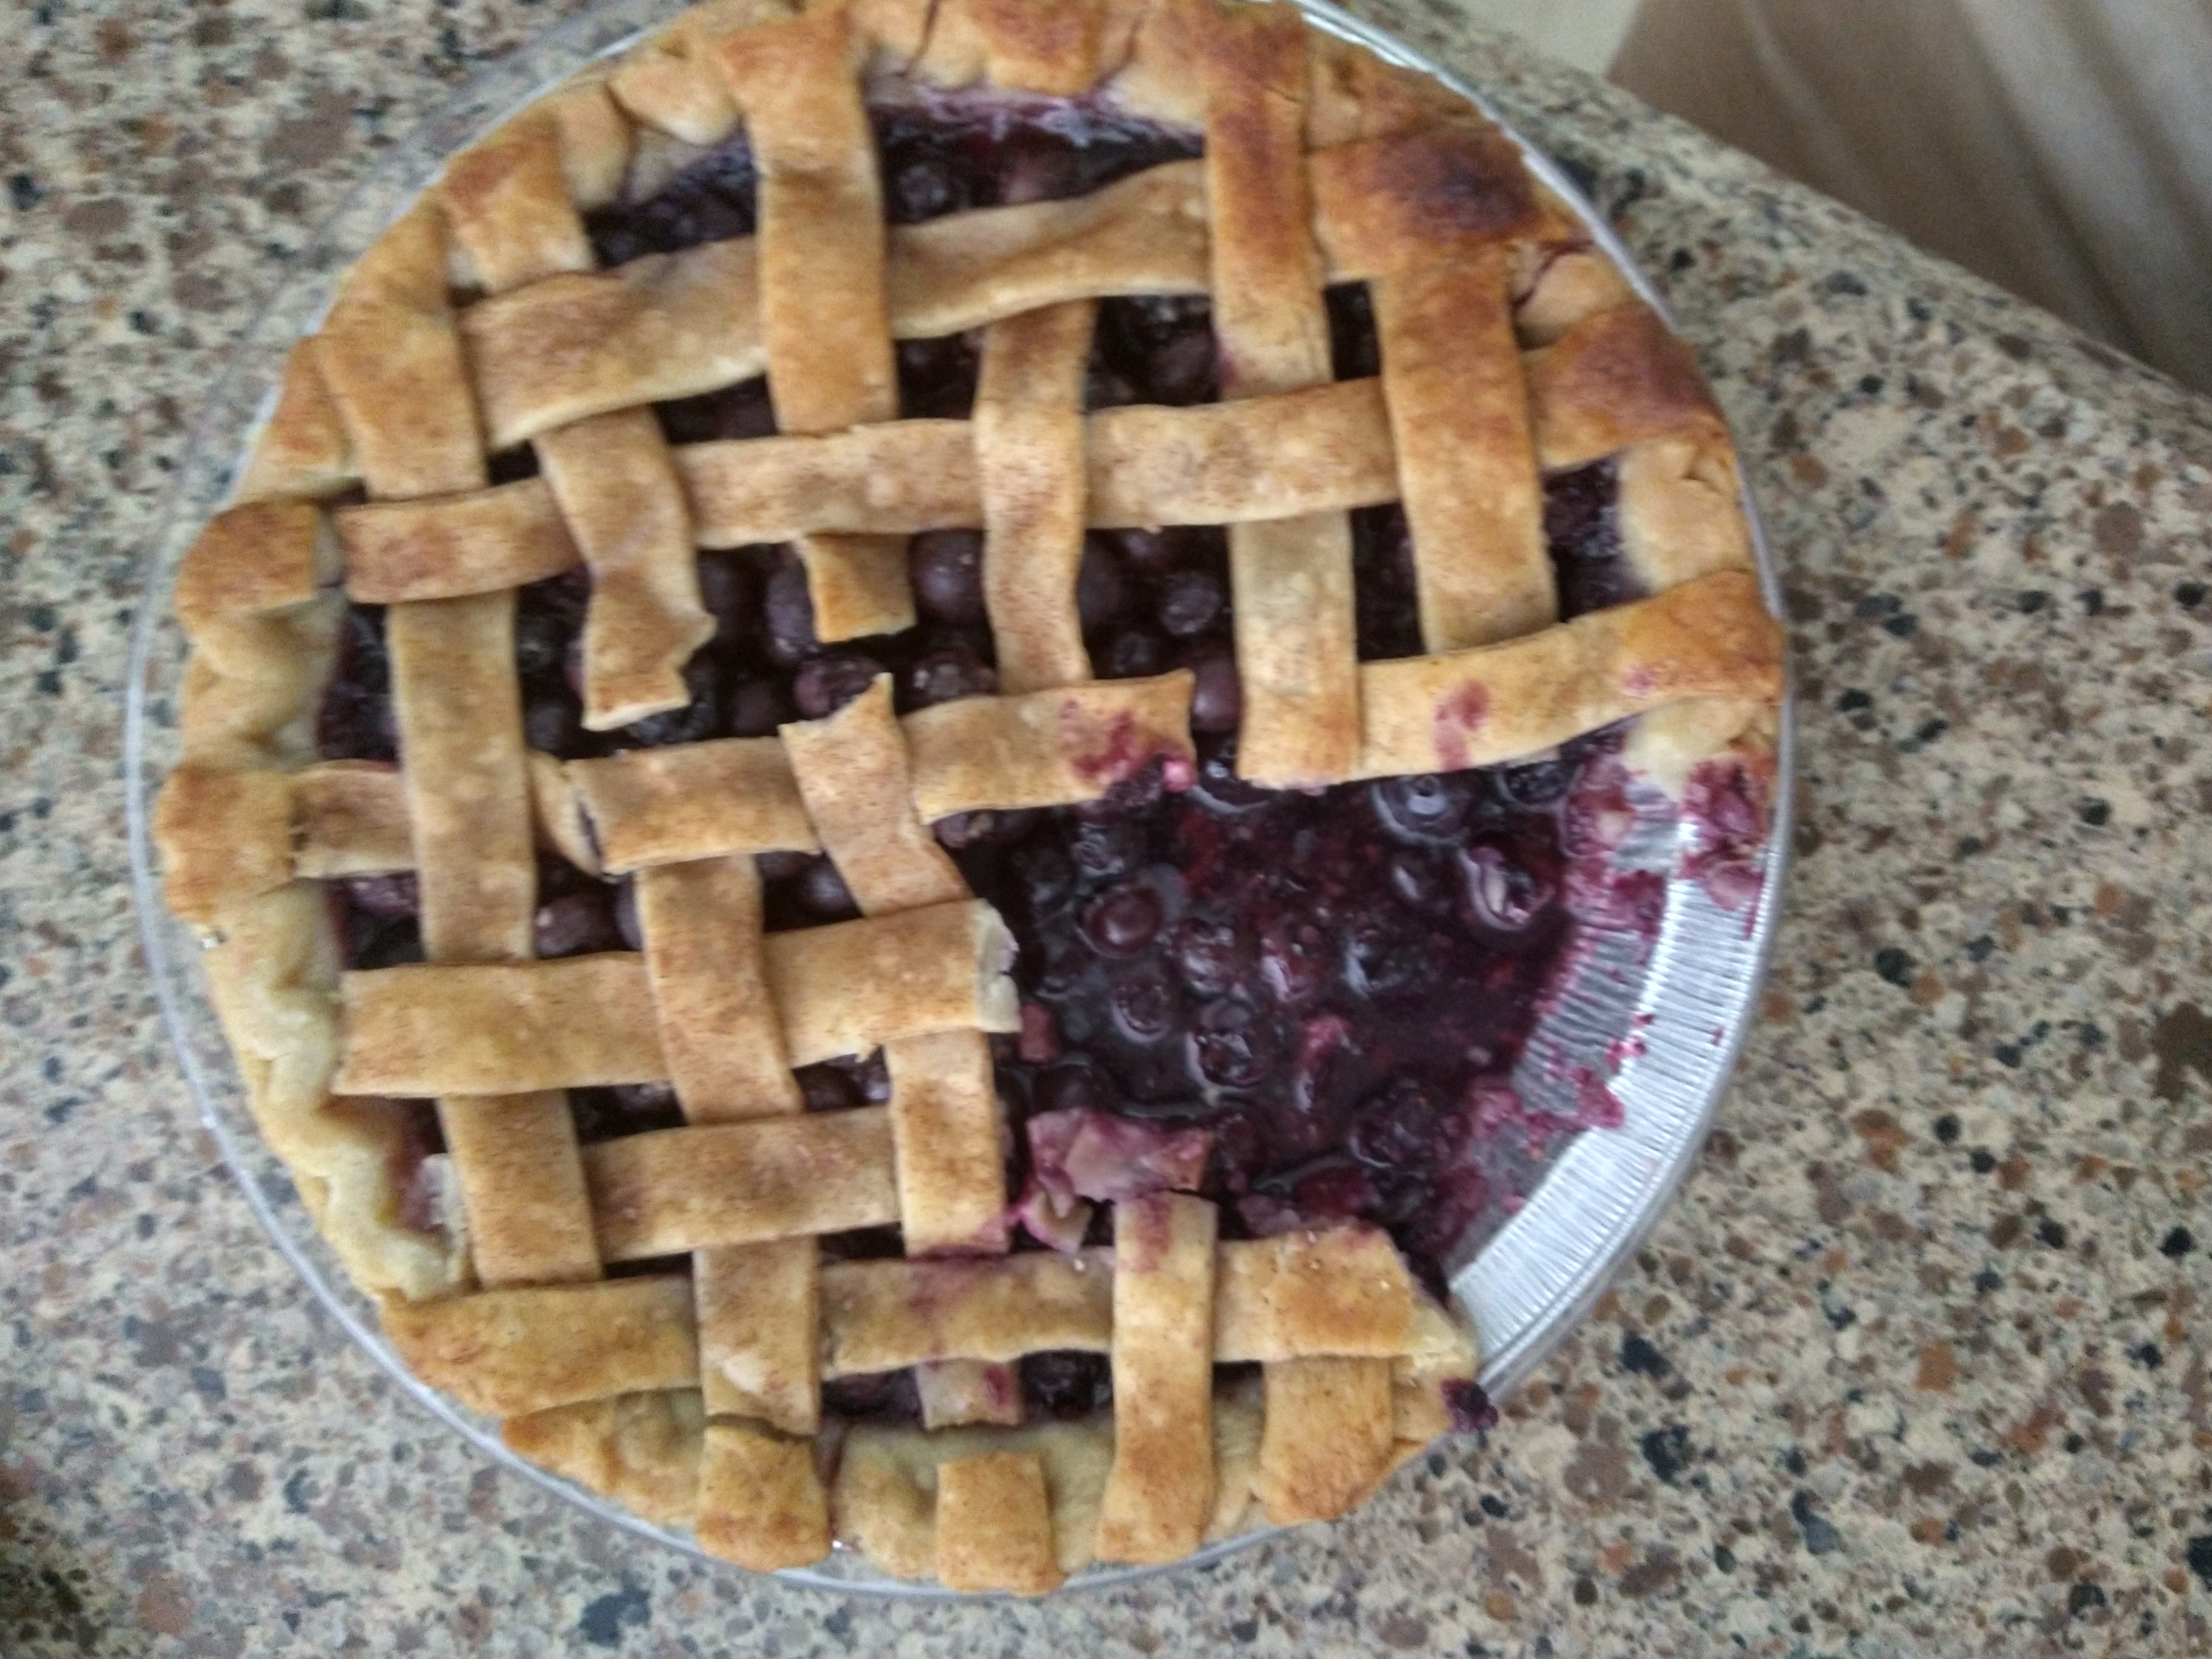 Blueberry Pie Allrecipes Member